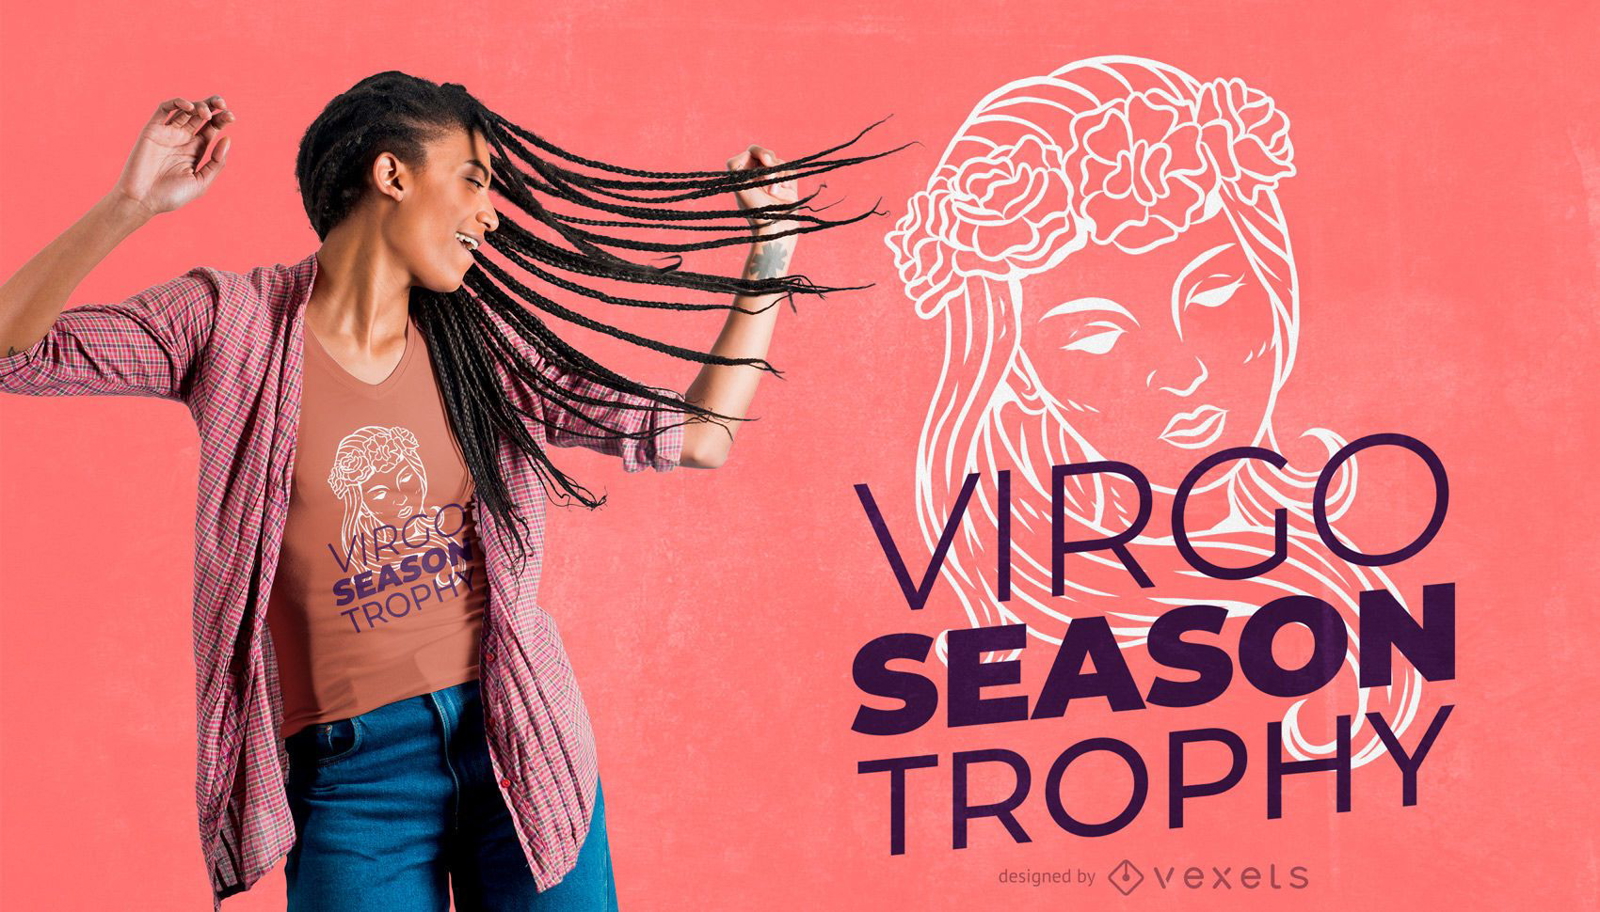 Virgo season trophy t-shirt design